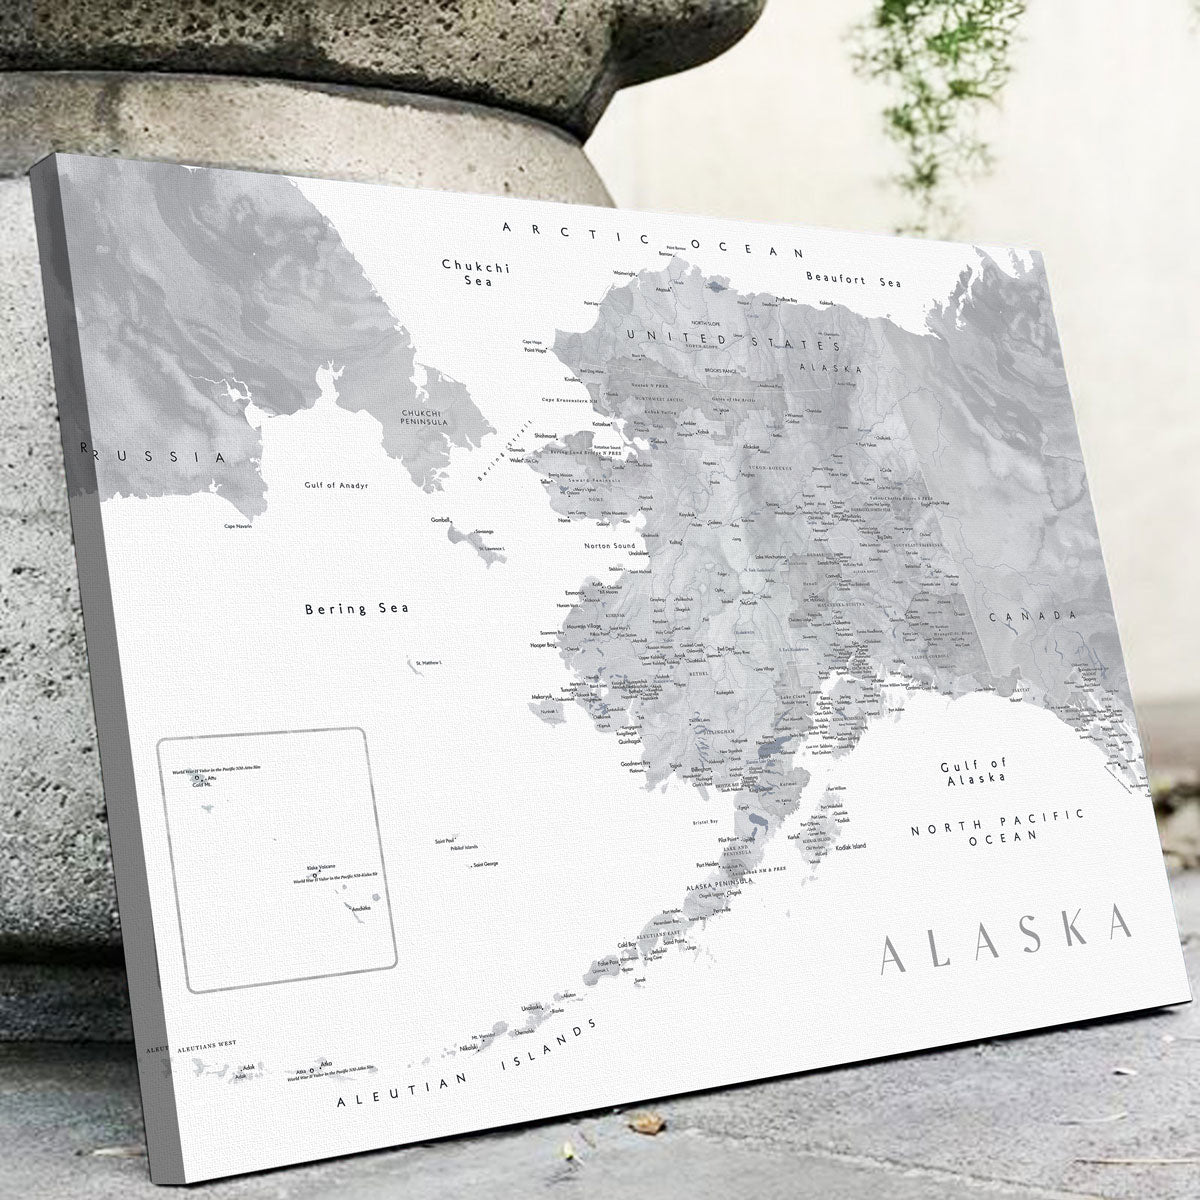 Alaska Map 2